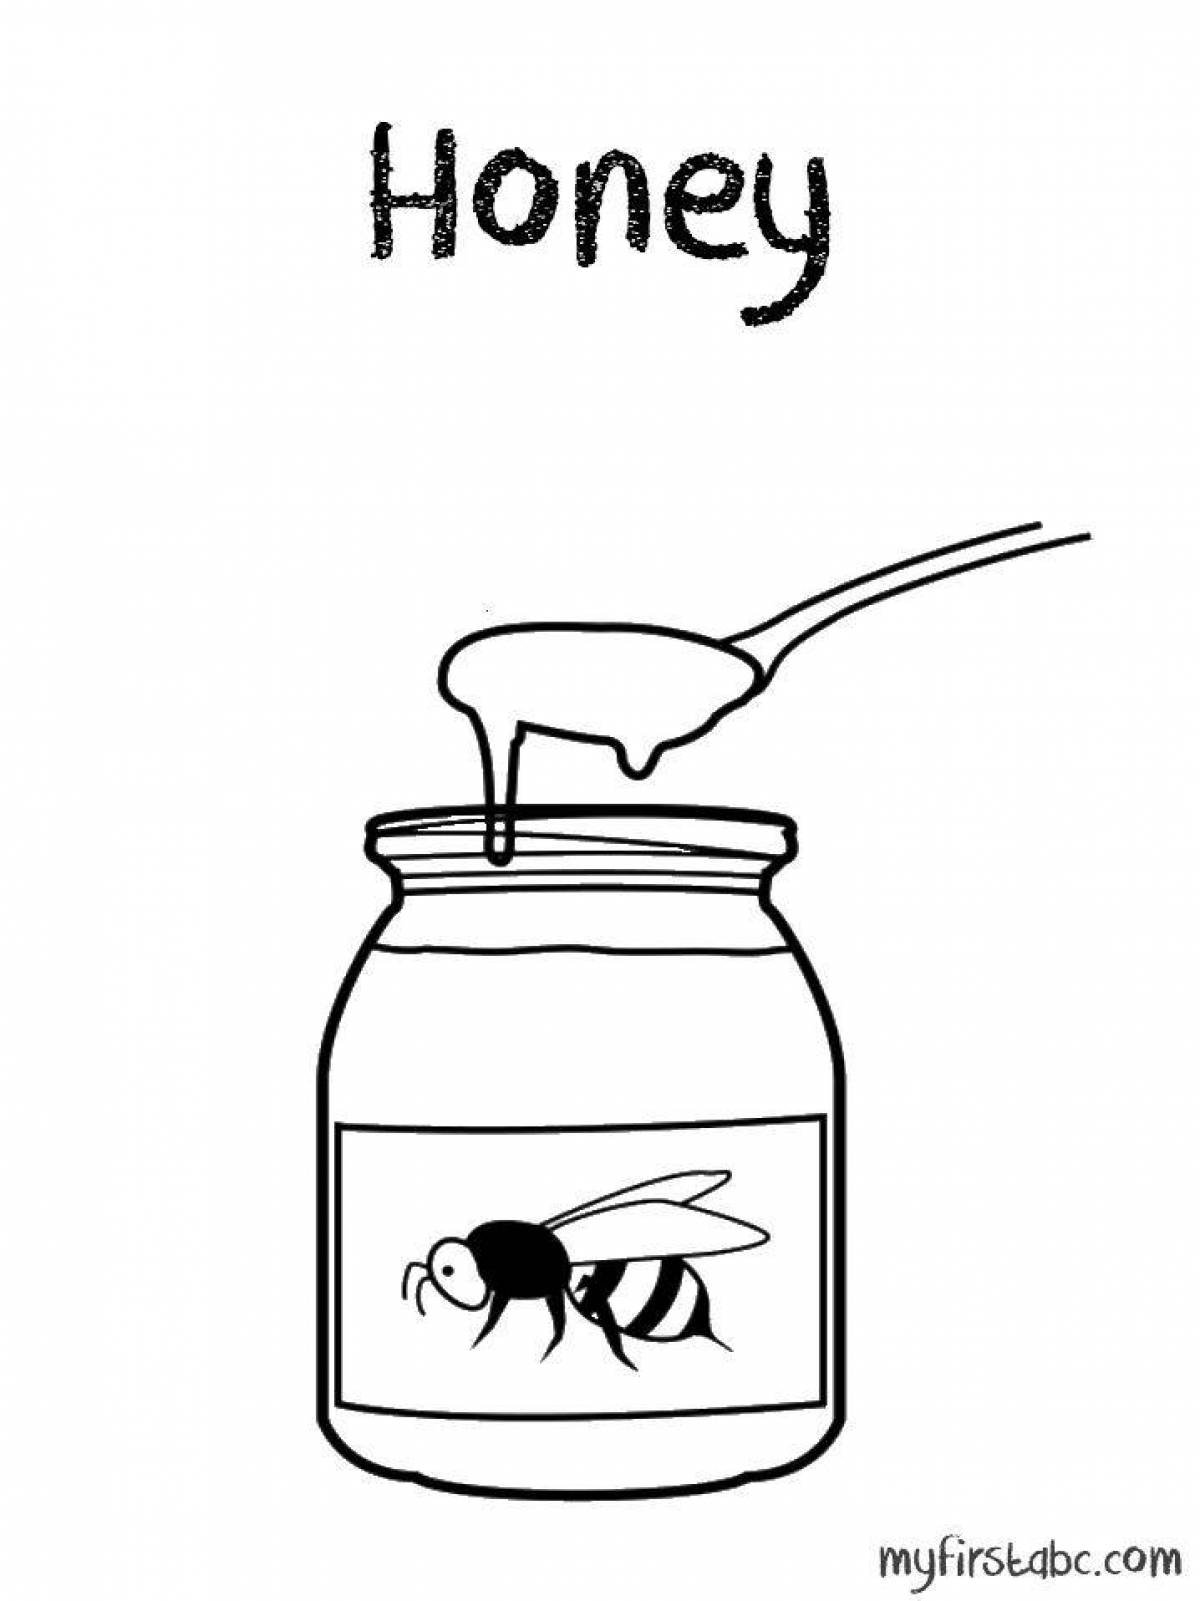 Bright honey coloring